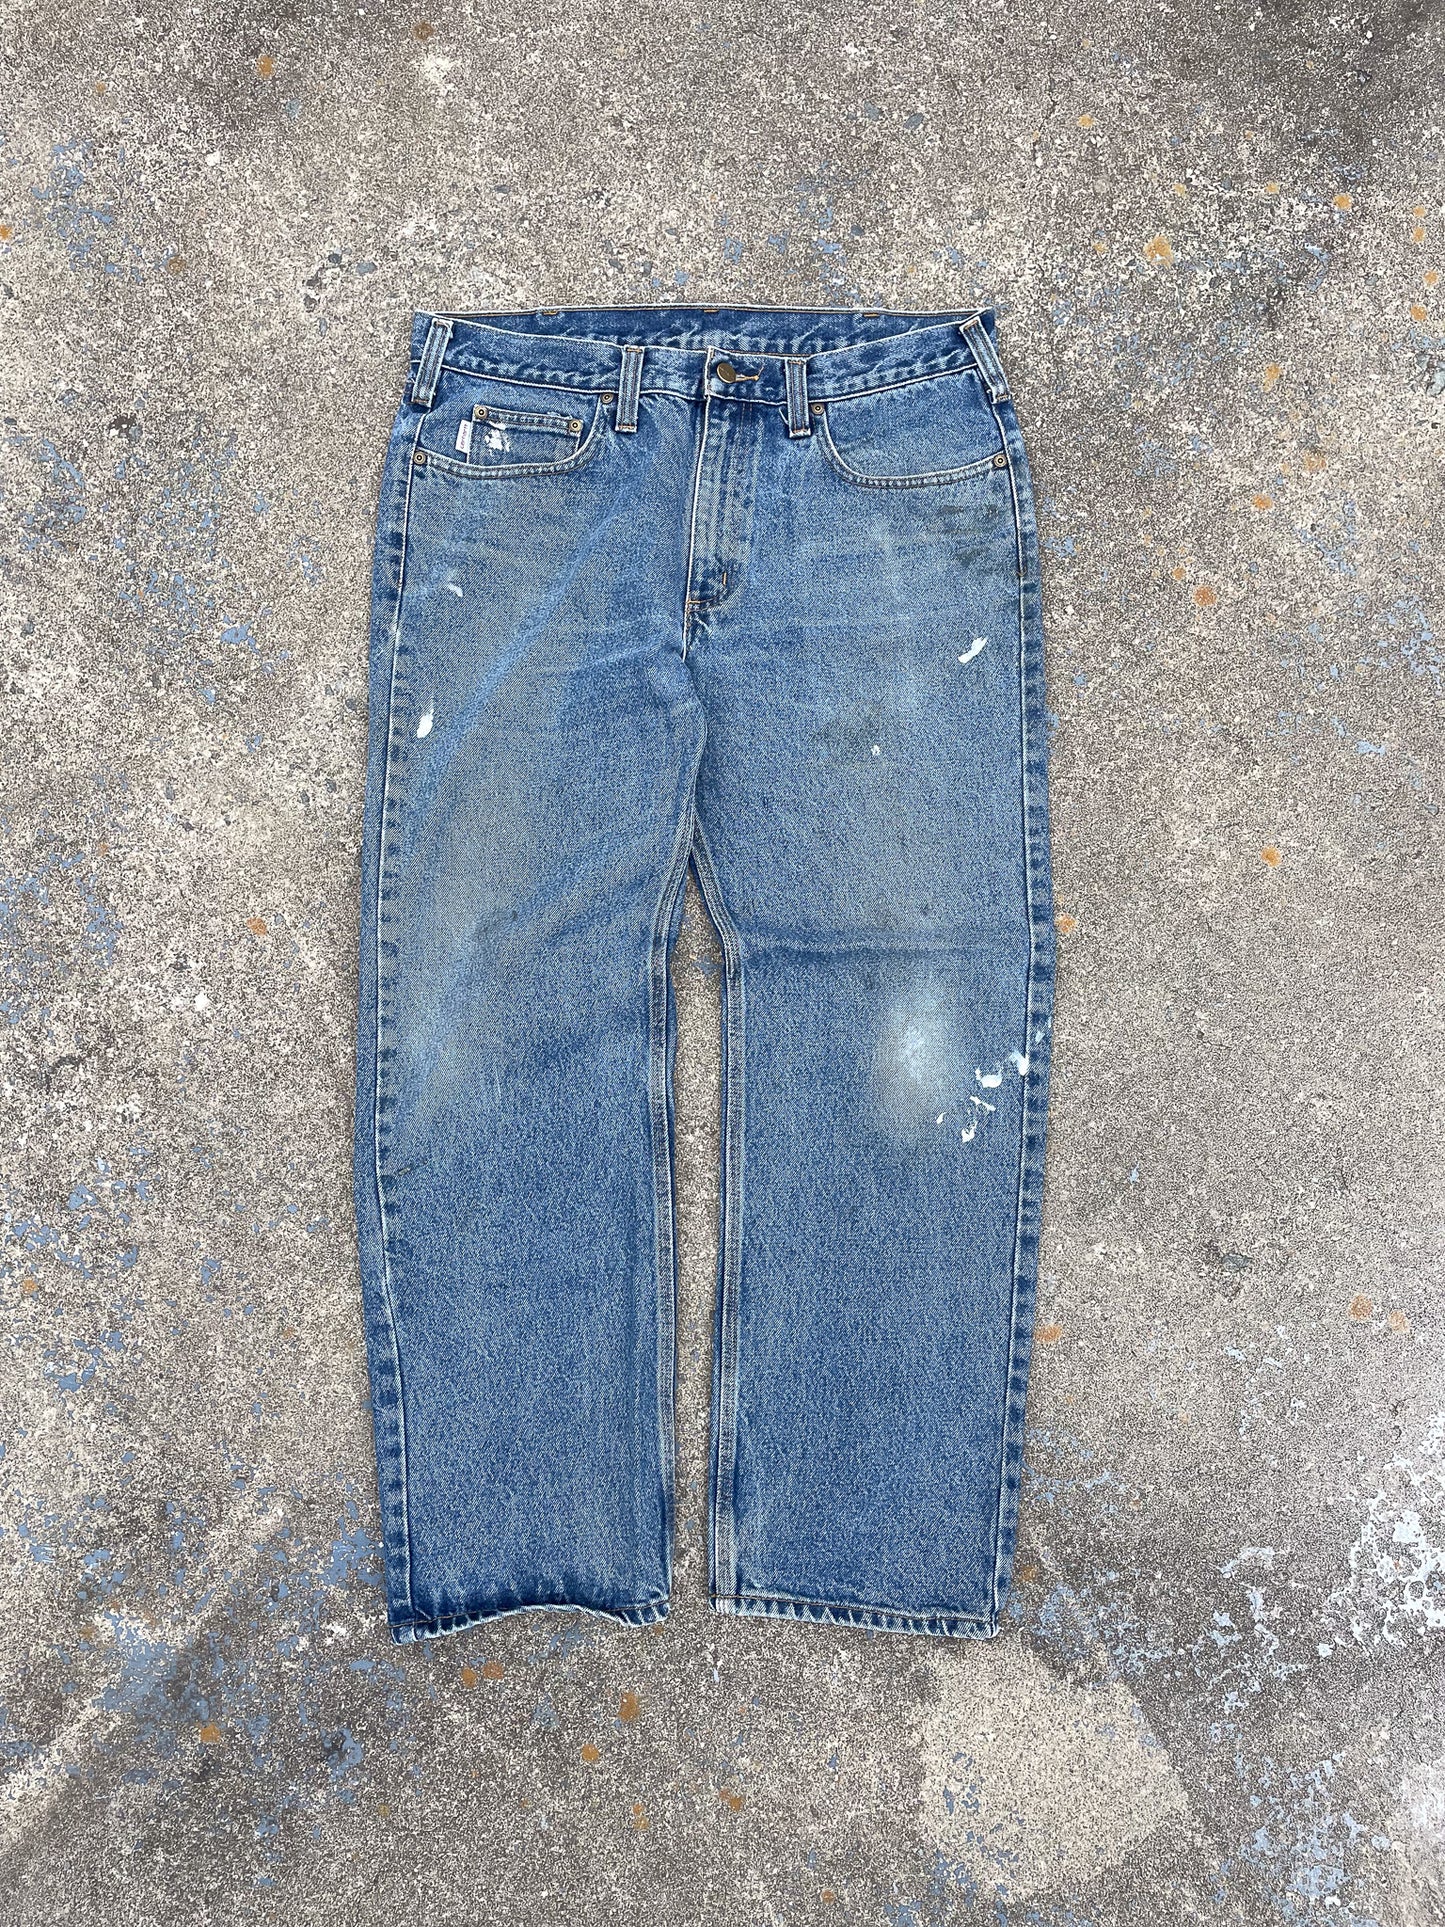 Carhartt Blue Jeans—[36x30]